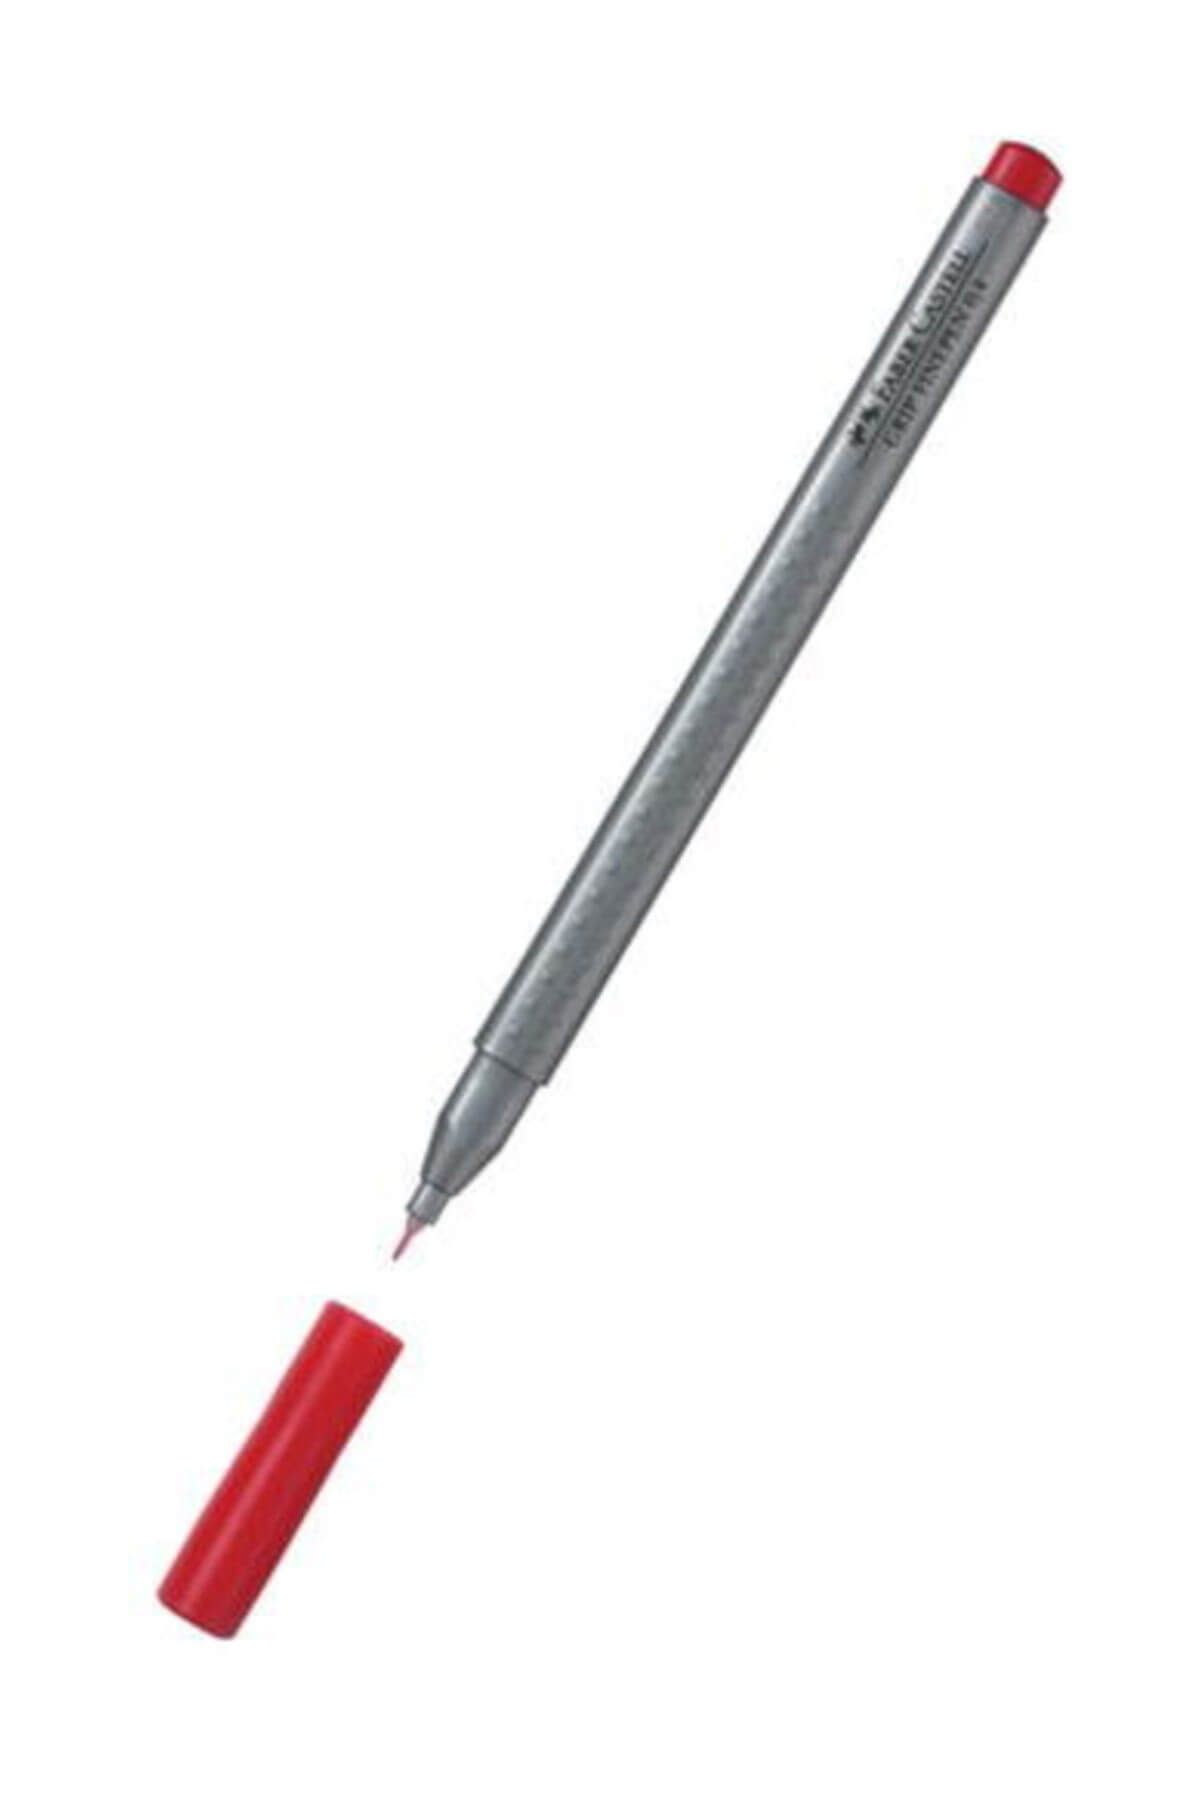 Faber Castell Grip Finepen İnce Uçlu Kalem 0.4 mm Lal Kırmızı